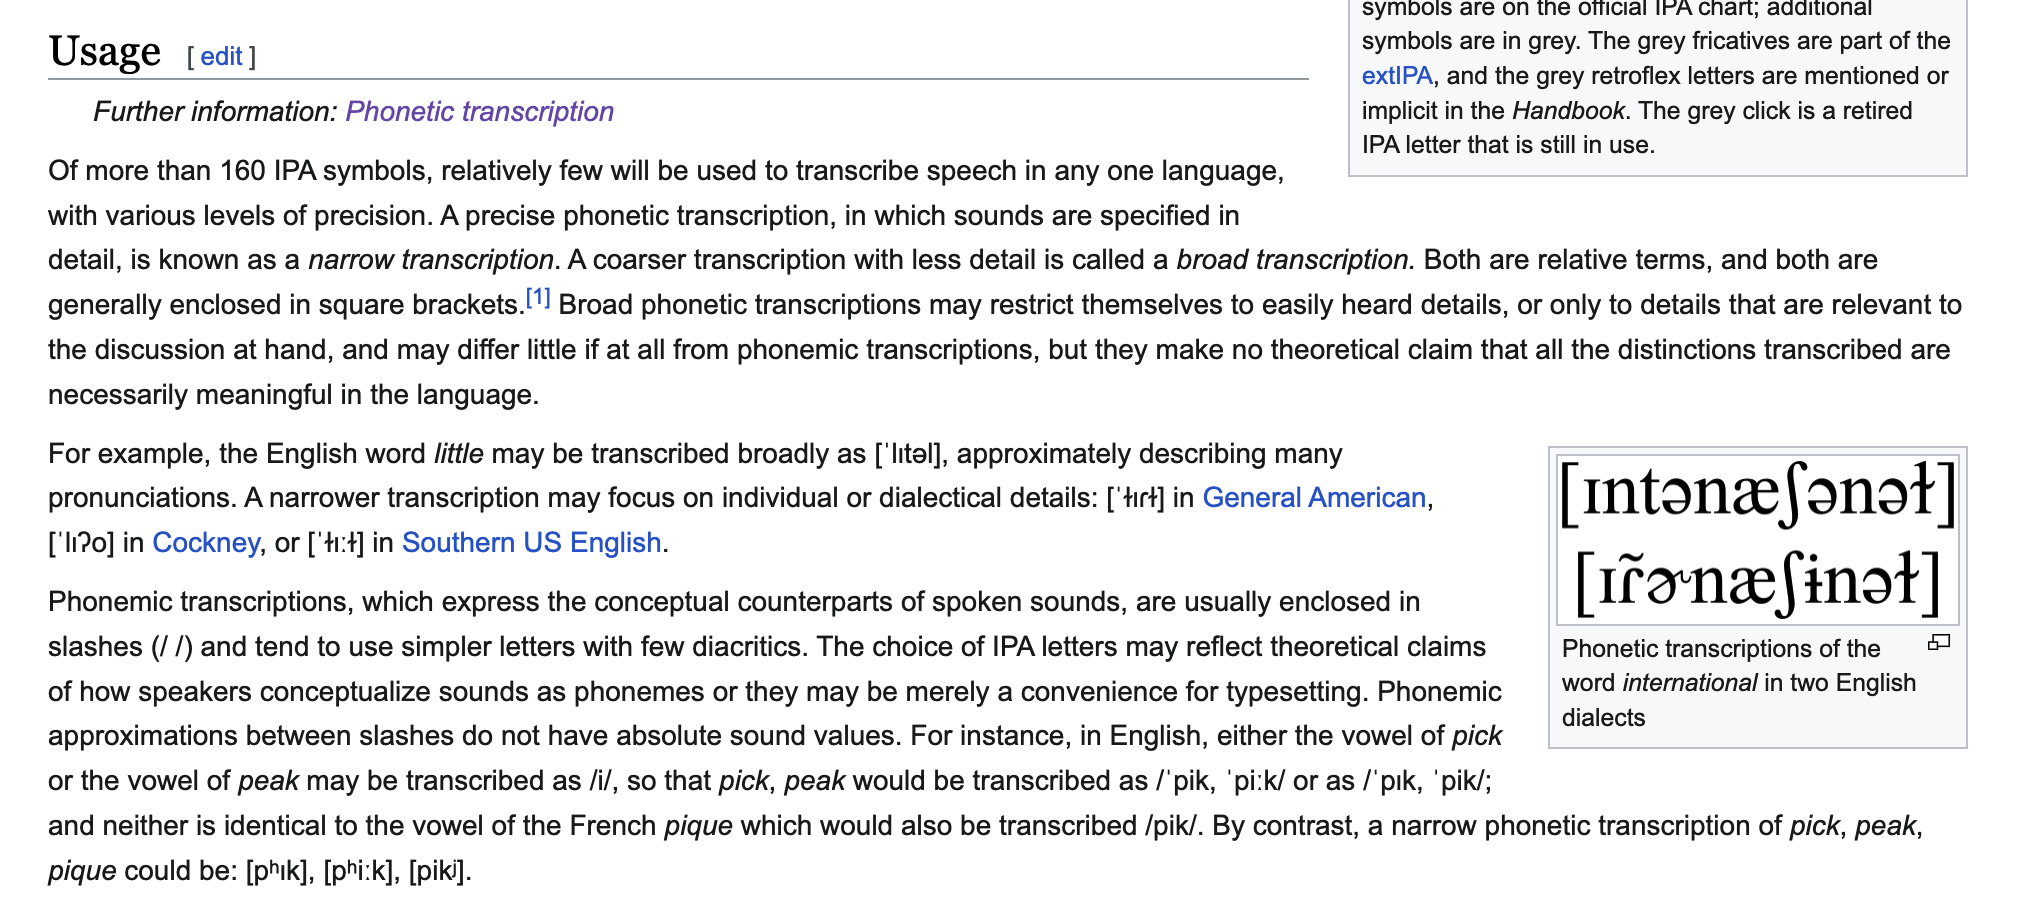 https://en.wikipedia.org/wiki/International_Phonetic_Alphabet